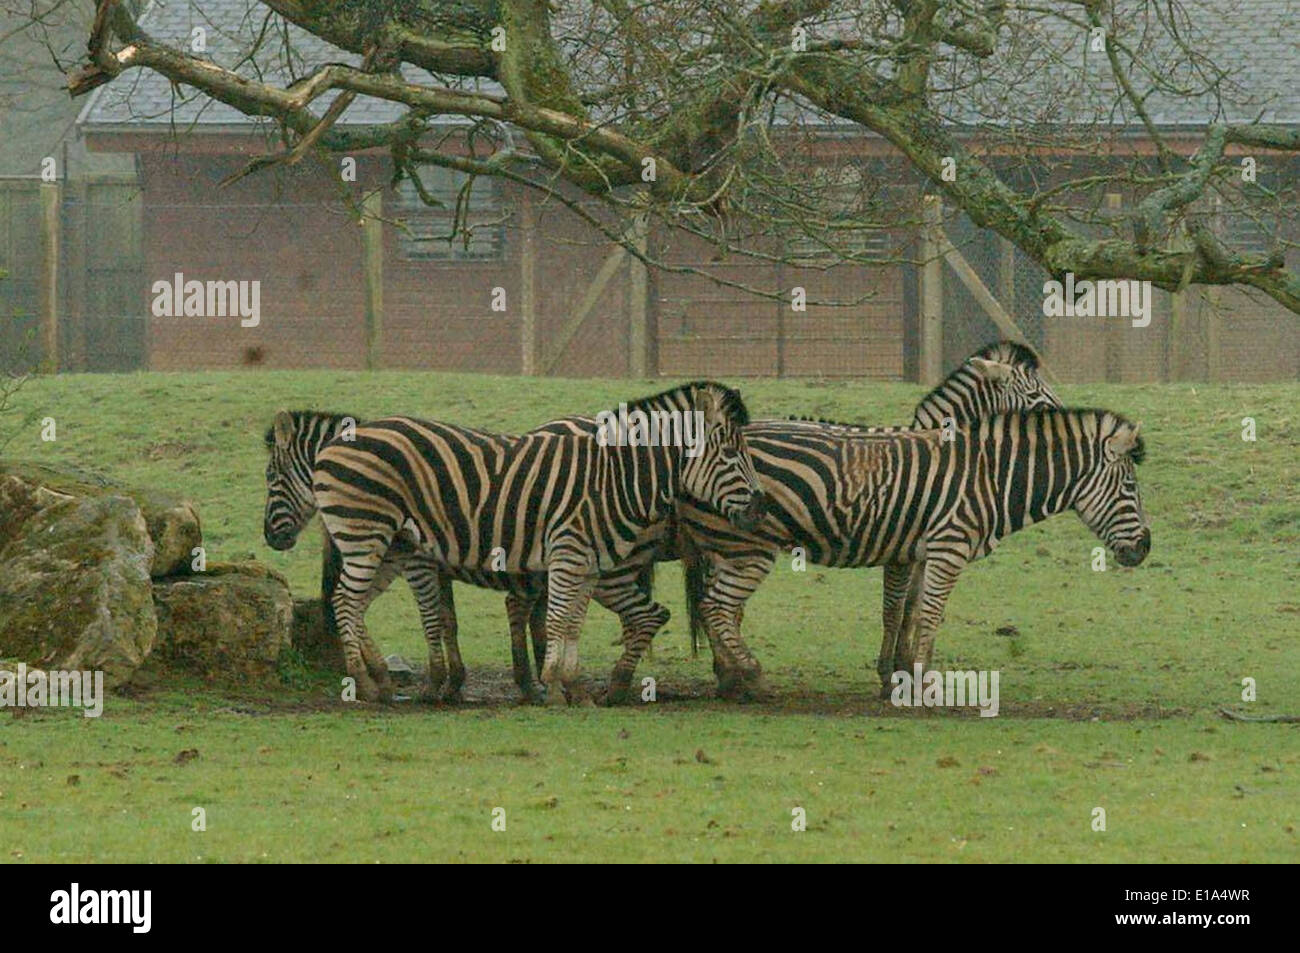 Zebras at a wildlife park. Stock Photo